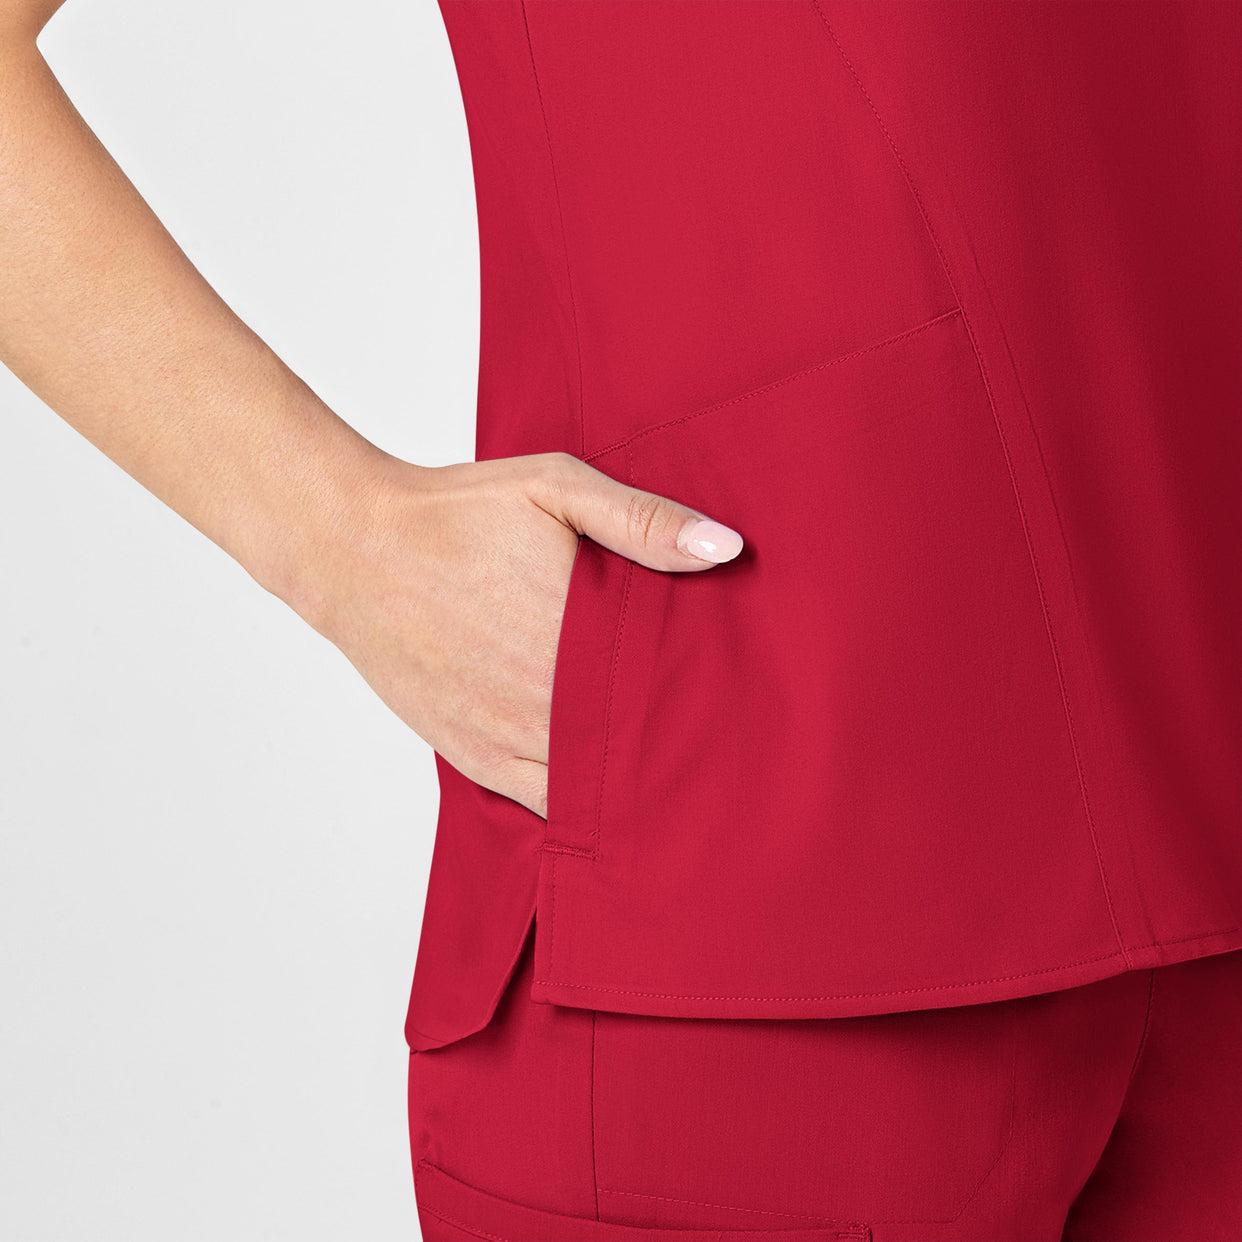 PRO Women's Four Pocket V-Neck Scrub Top - Red